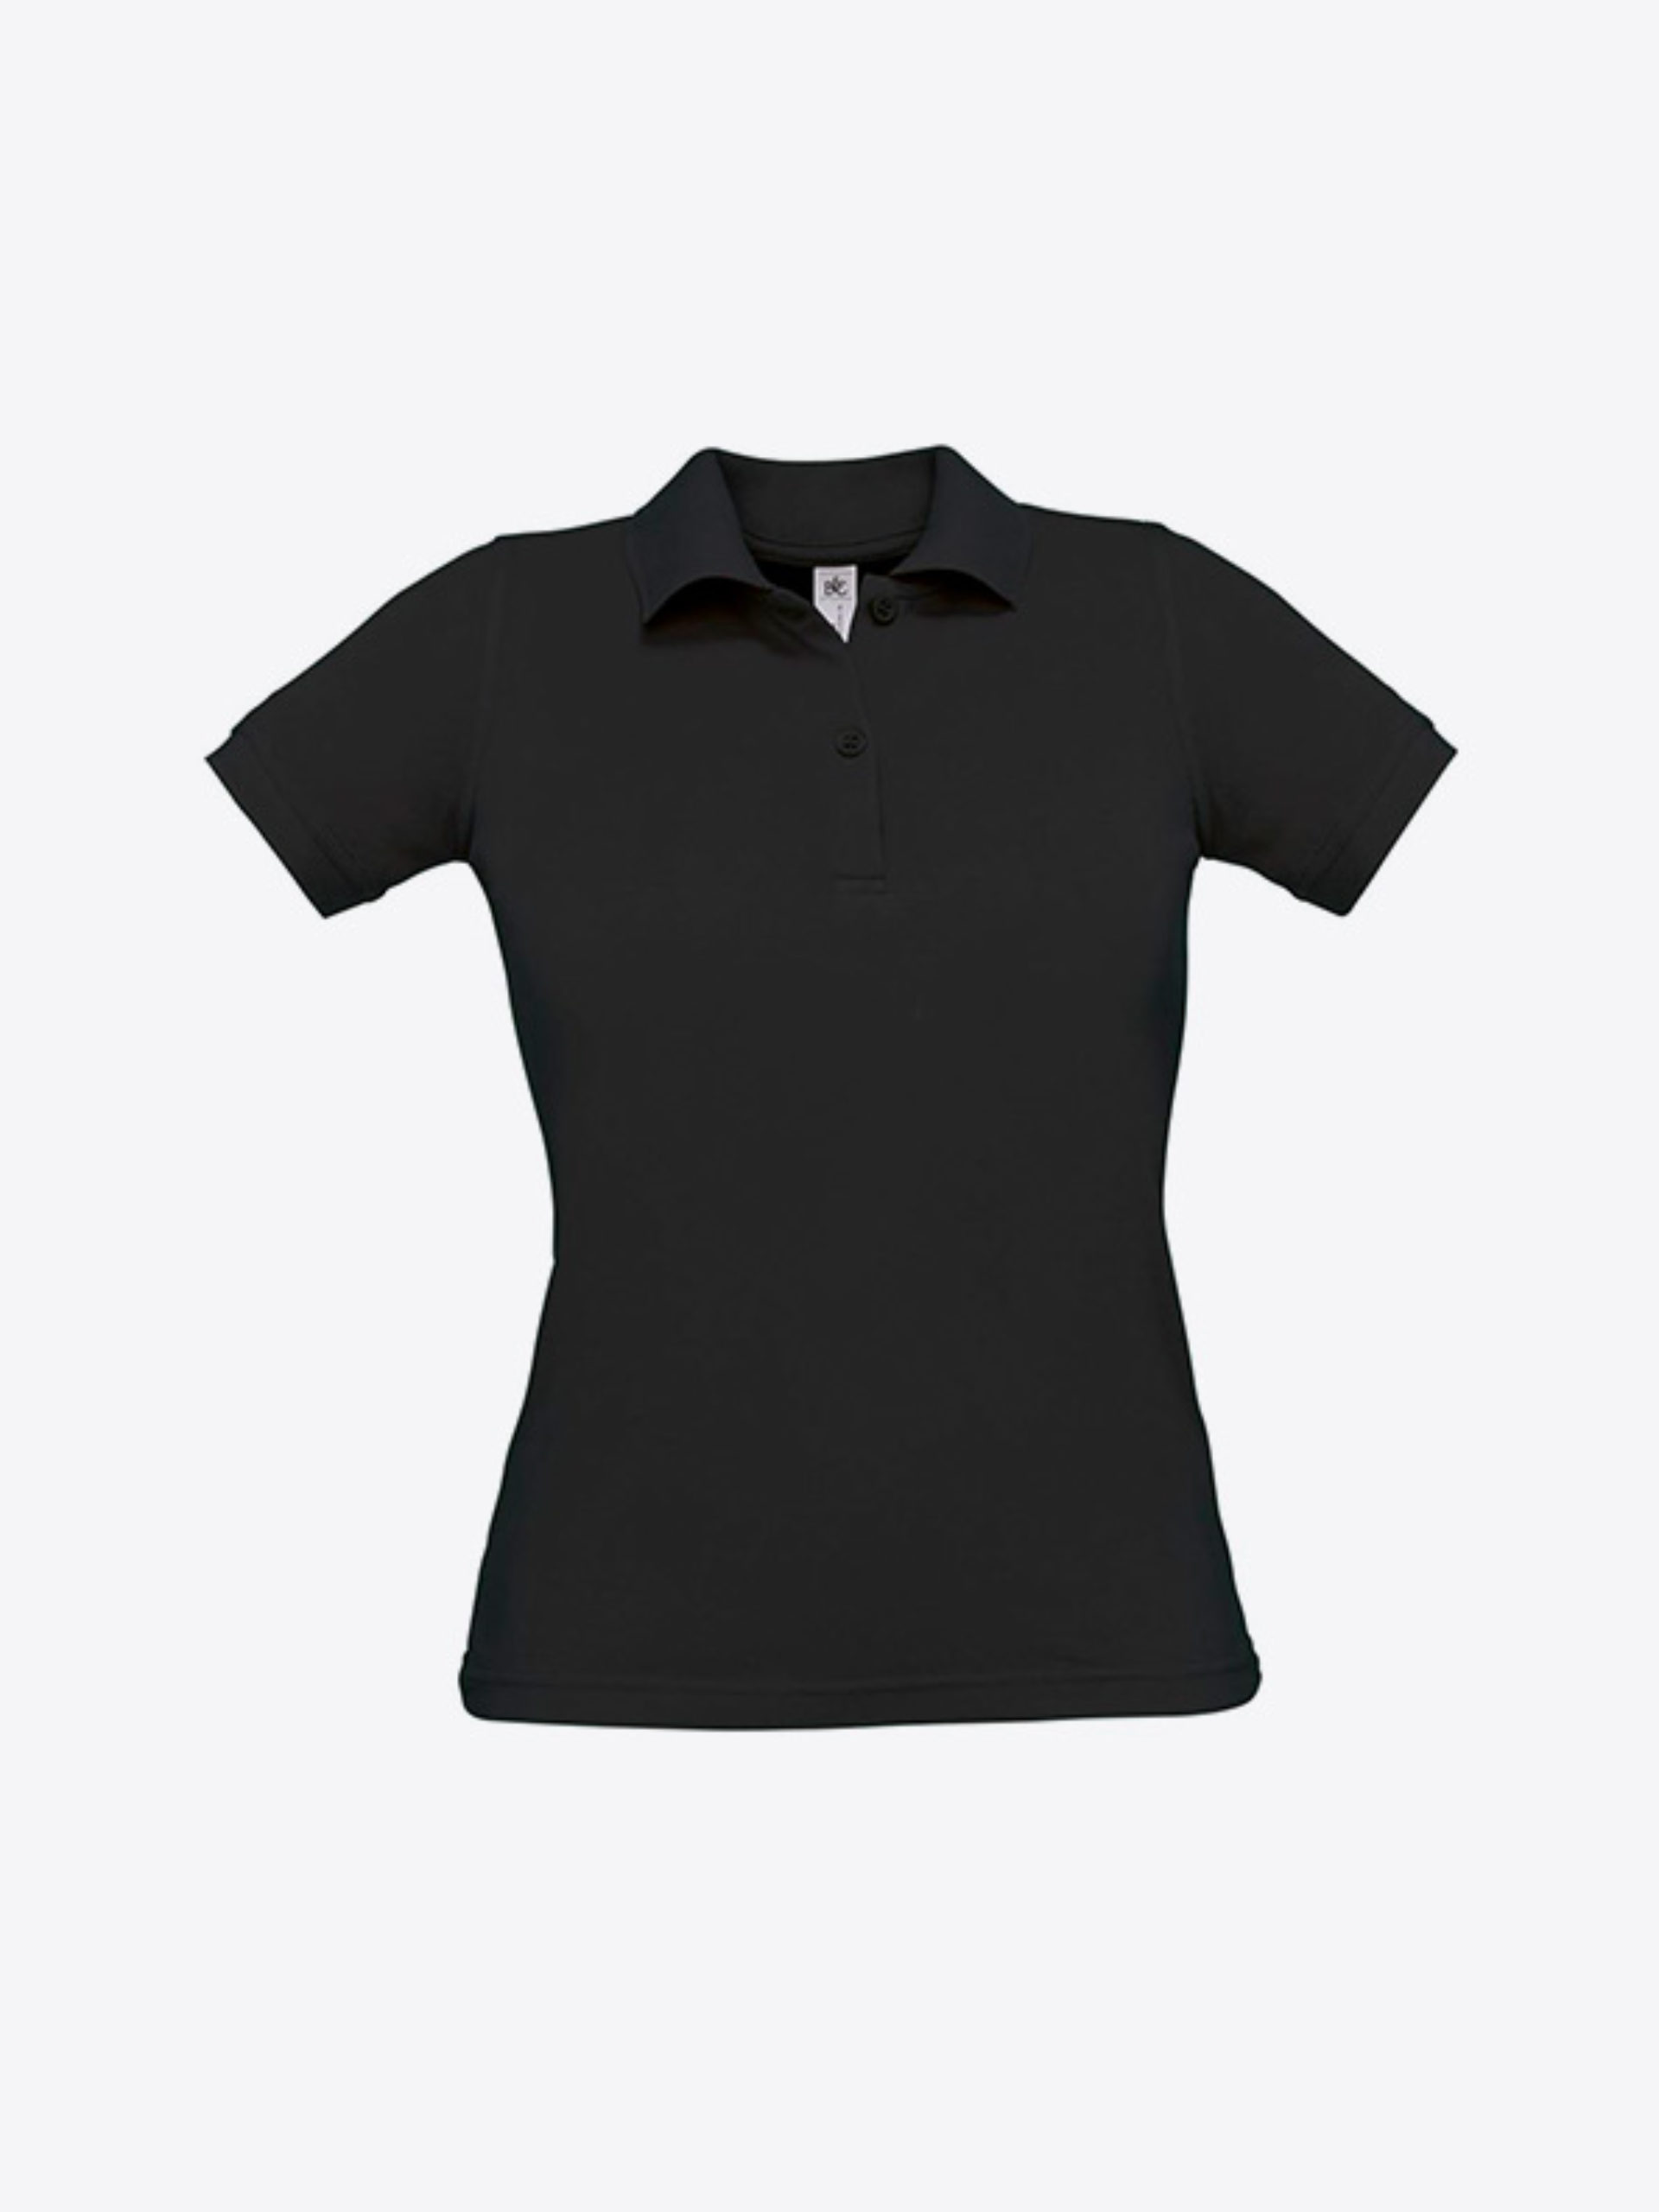 Damen Polo Shirt Besticken Lassen Bundc Safran Pw455 Black